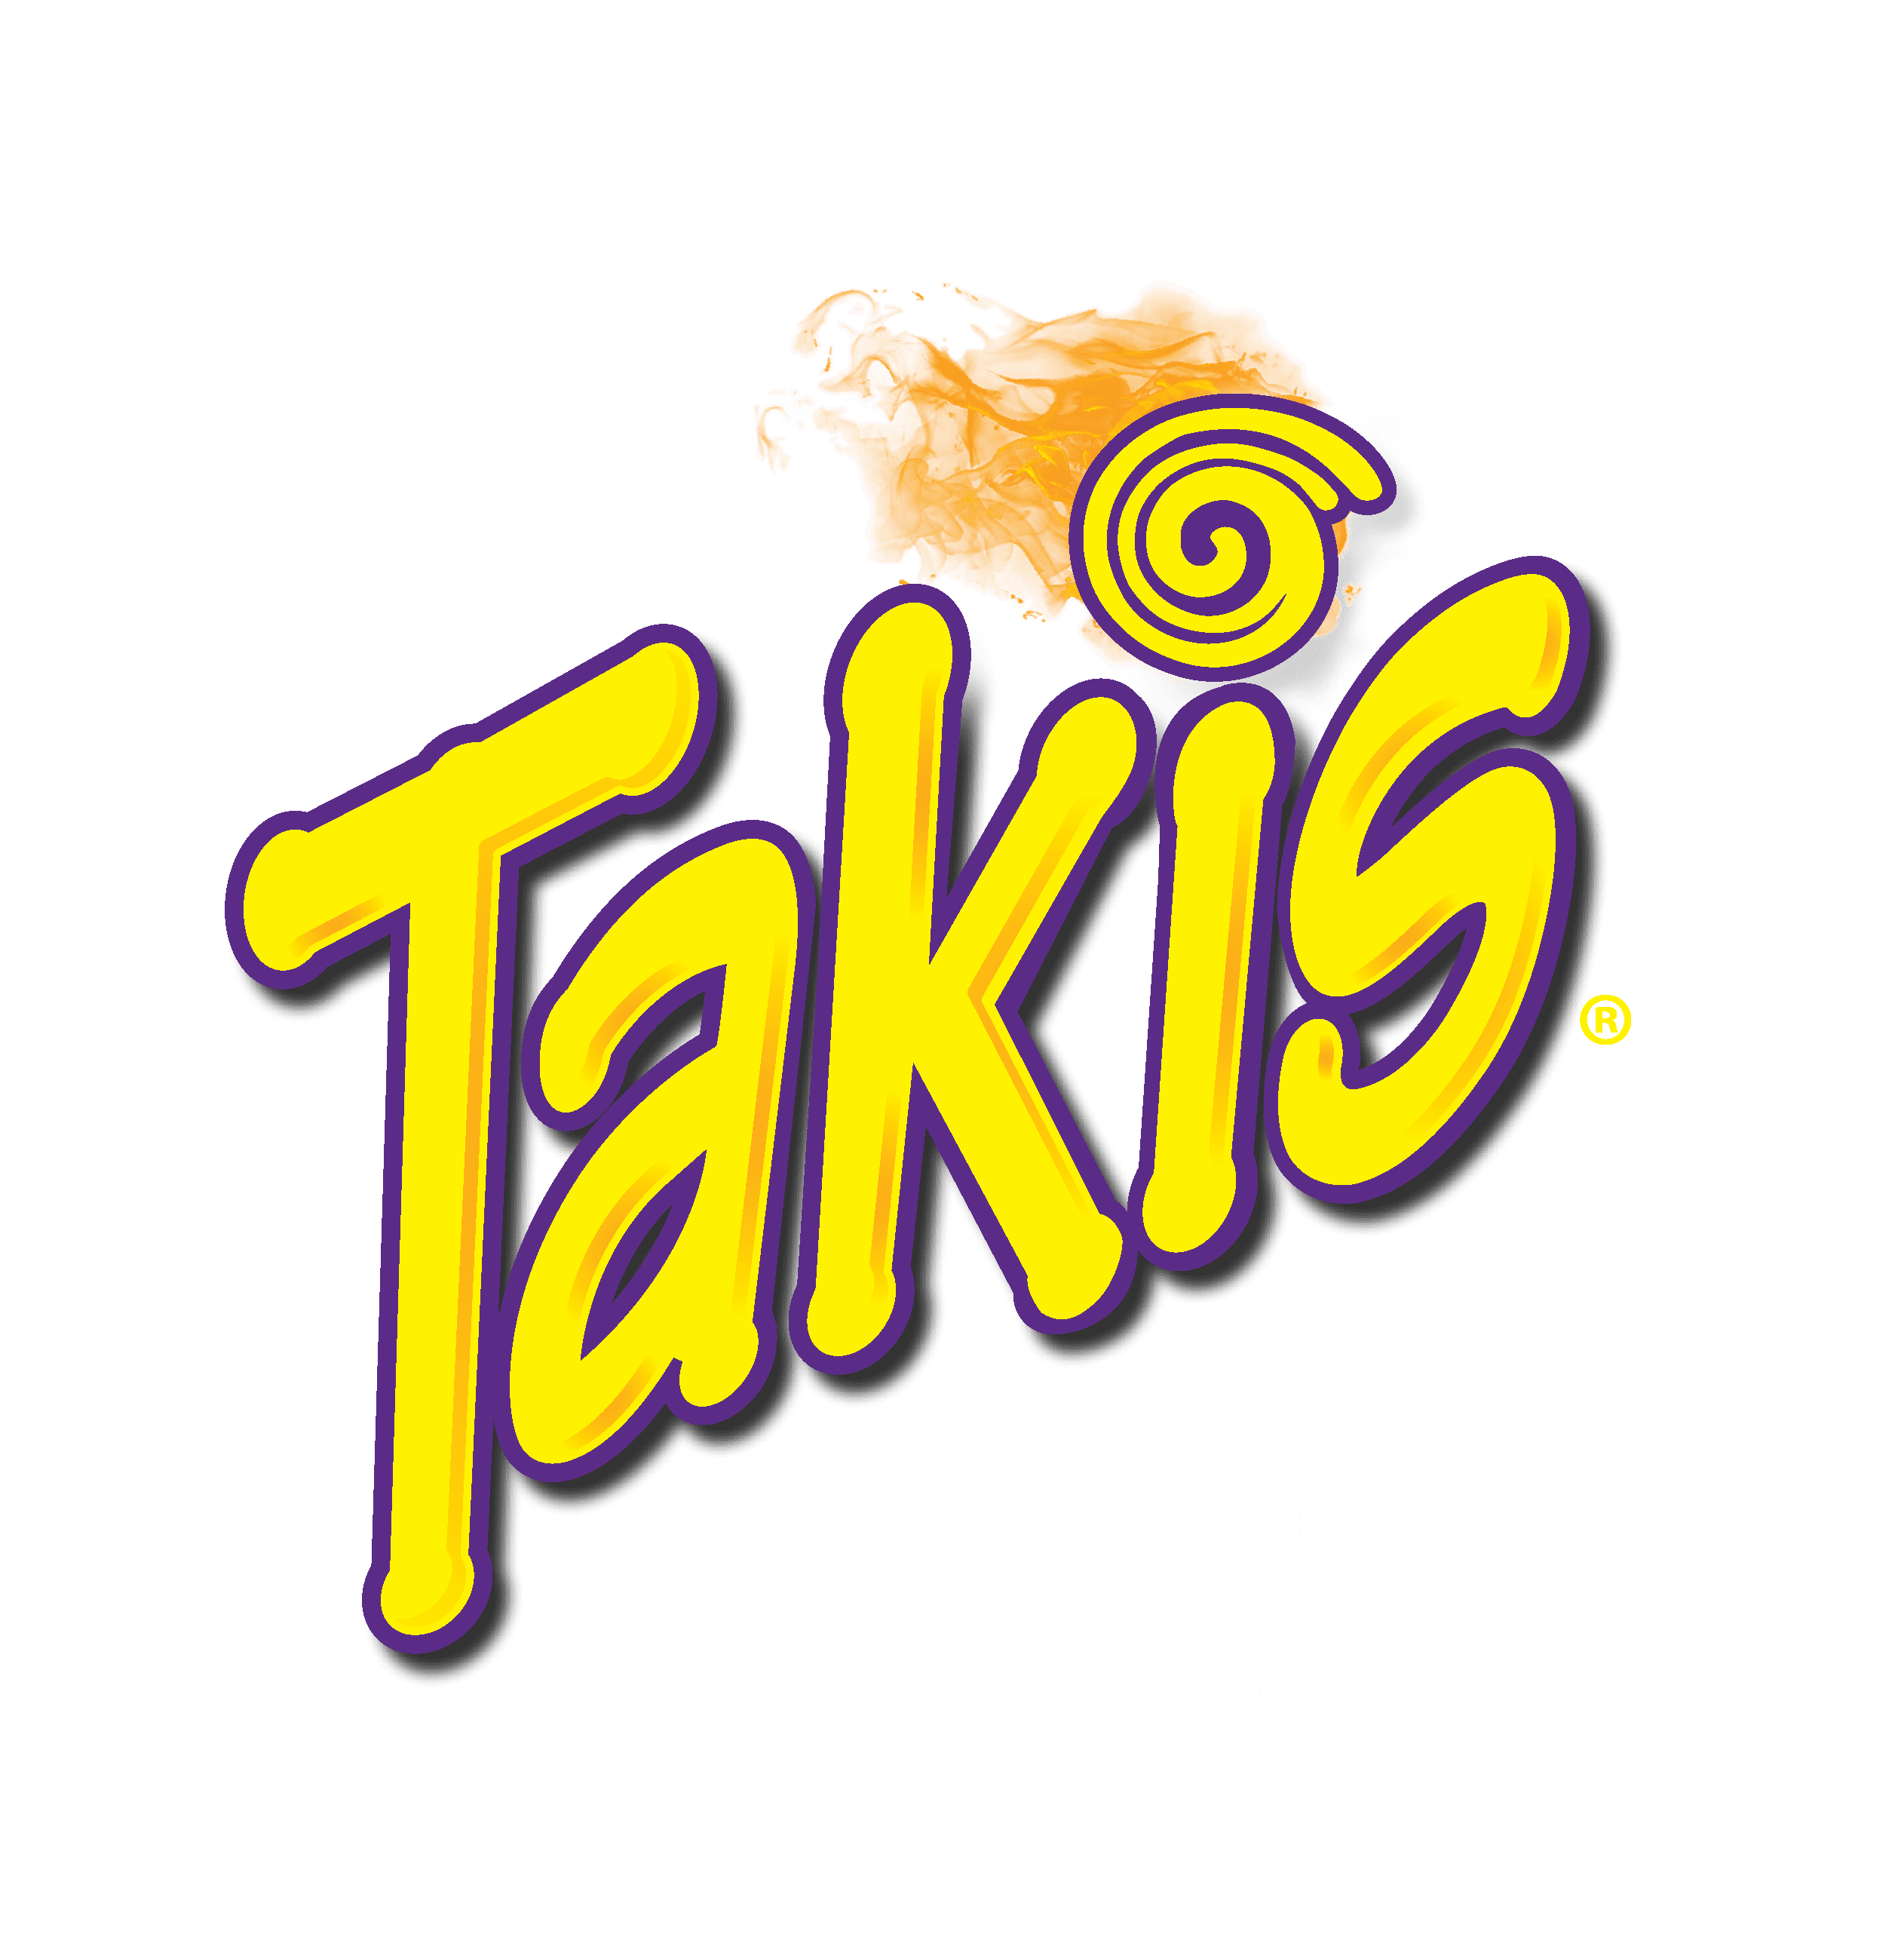 Takis chips